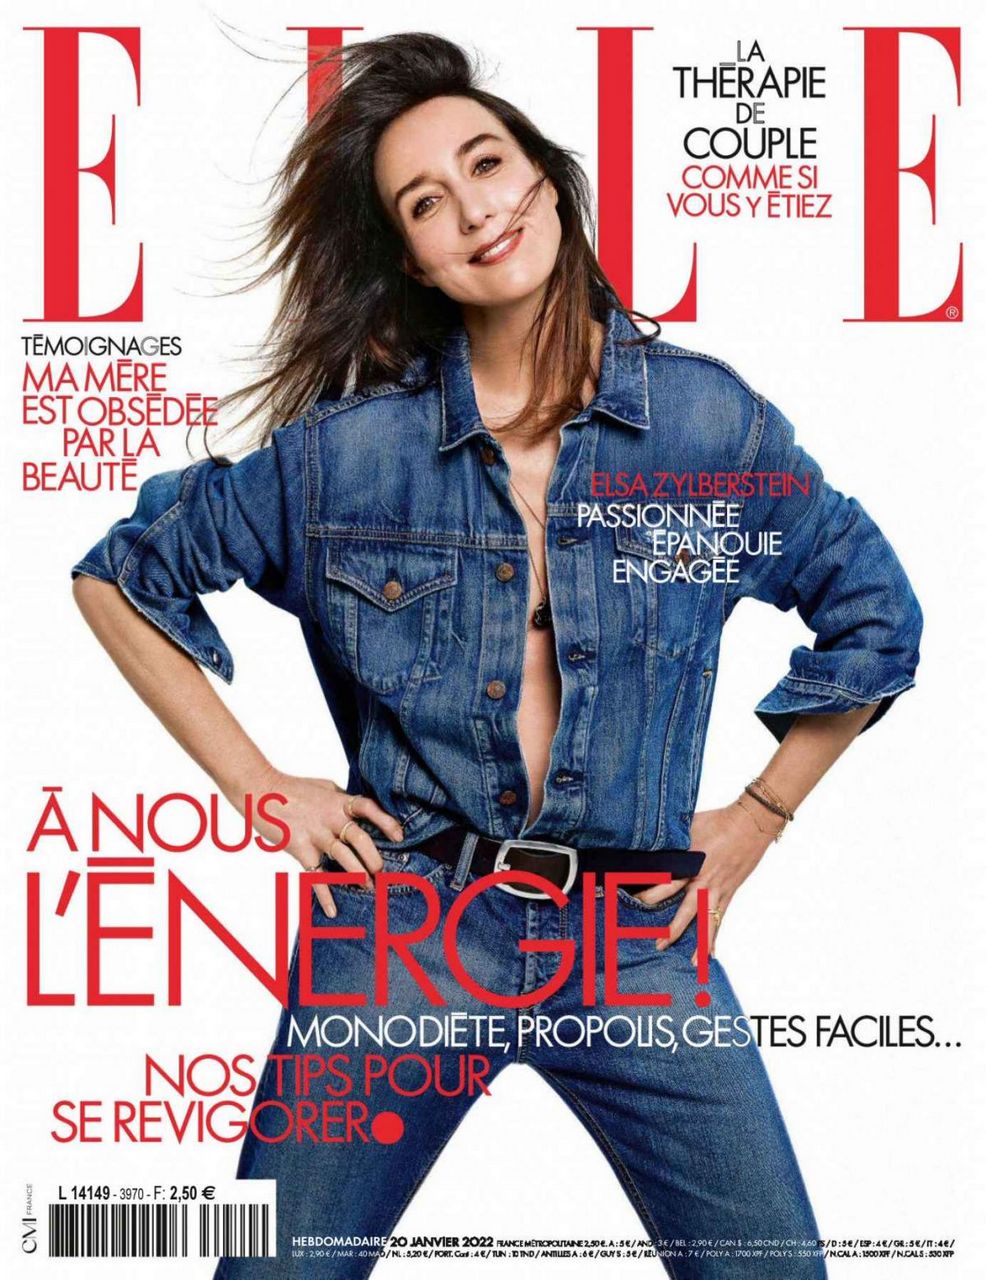 Elsa Zylberstein Elle Magazine France January